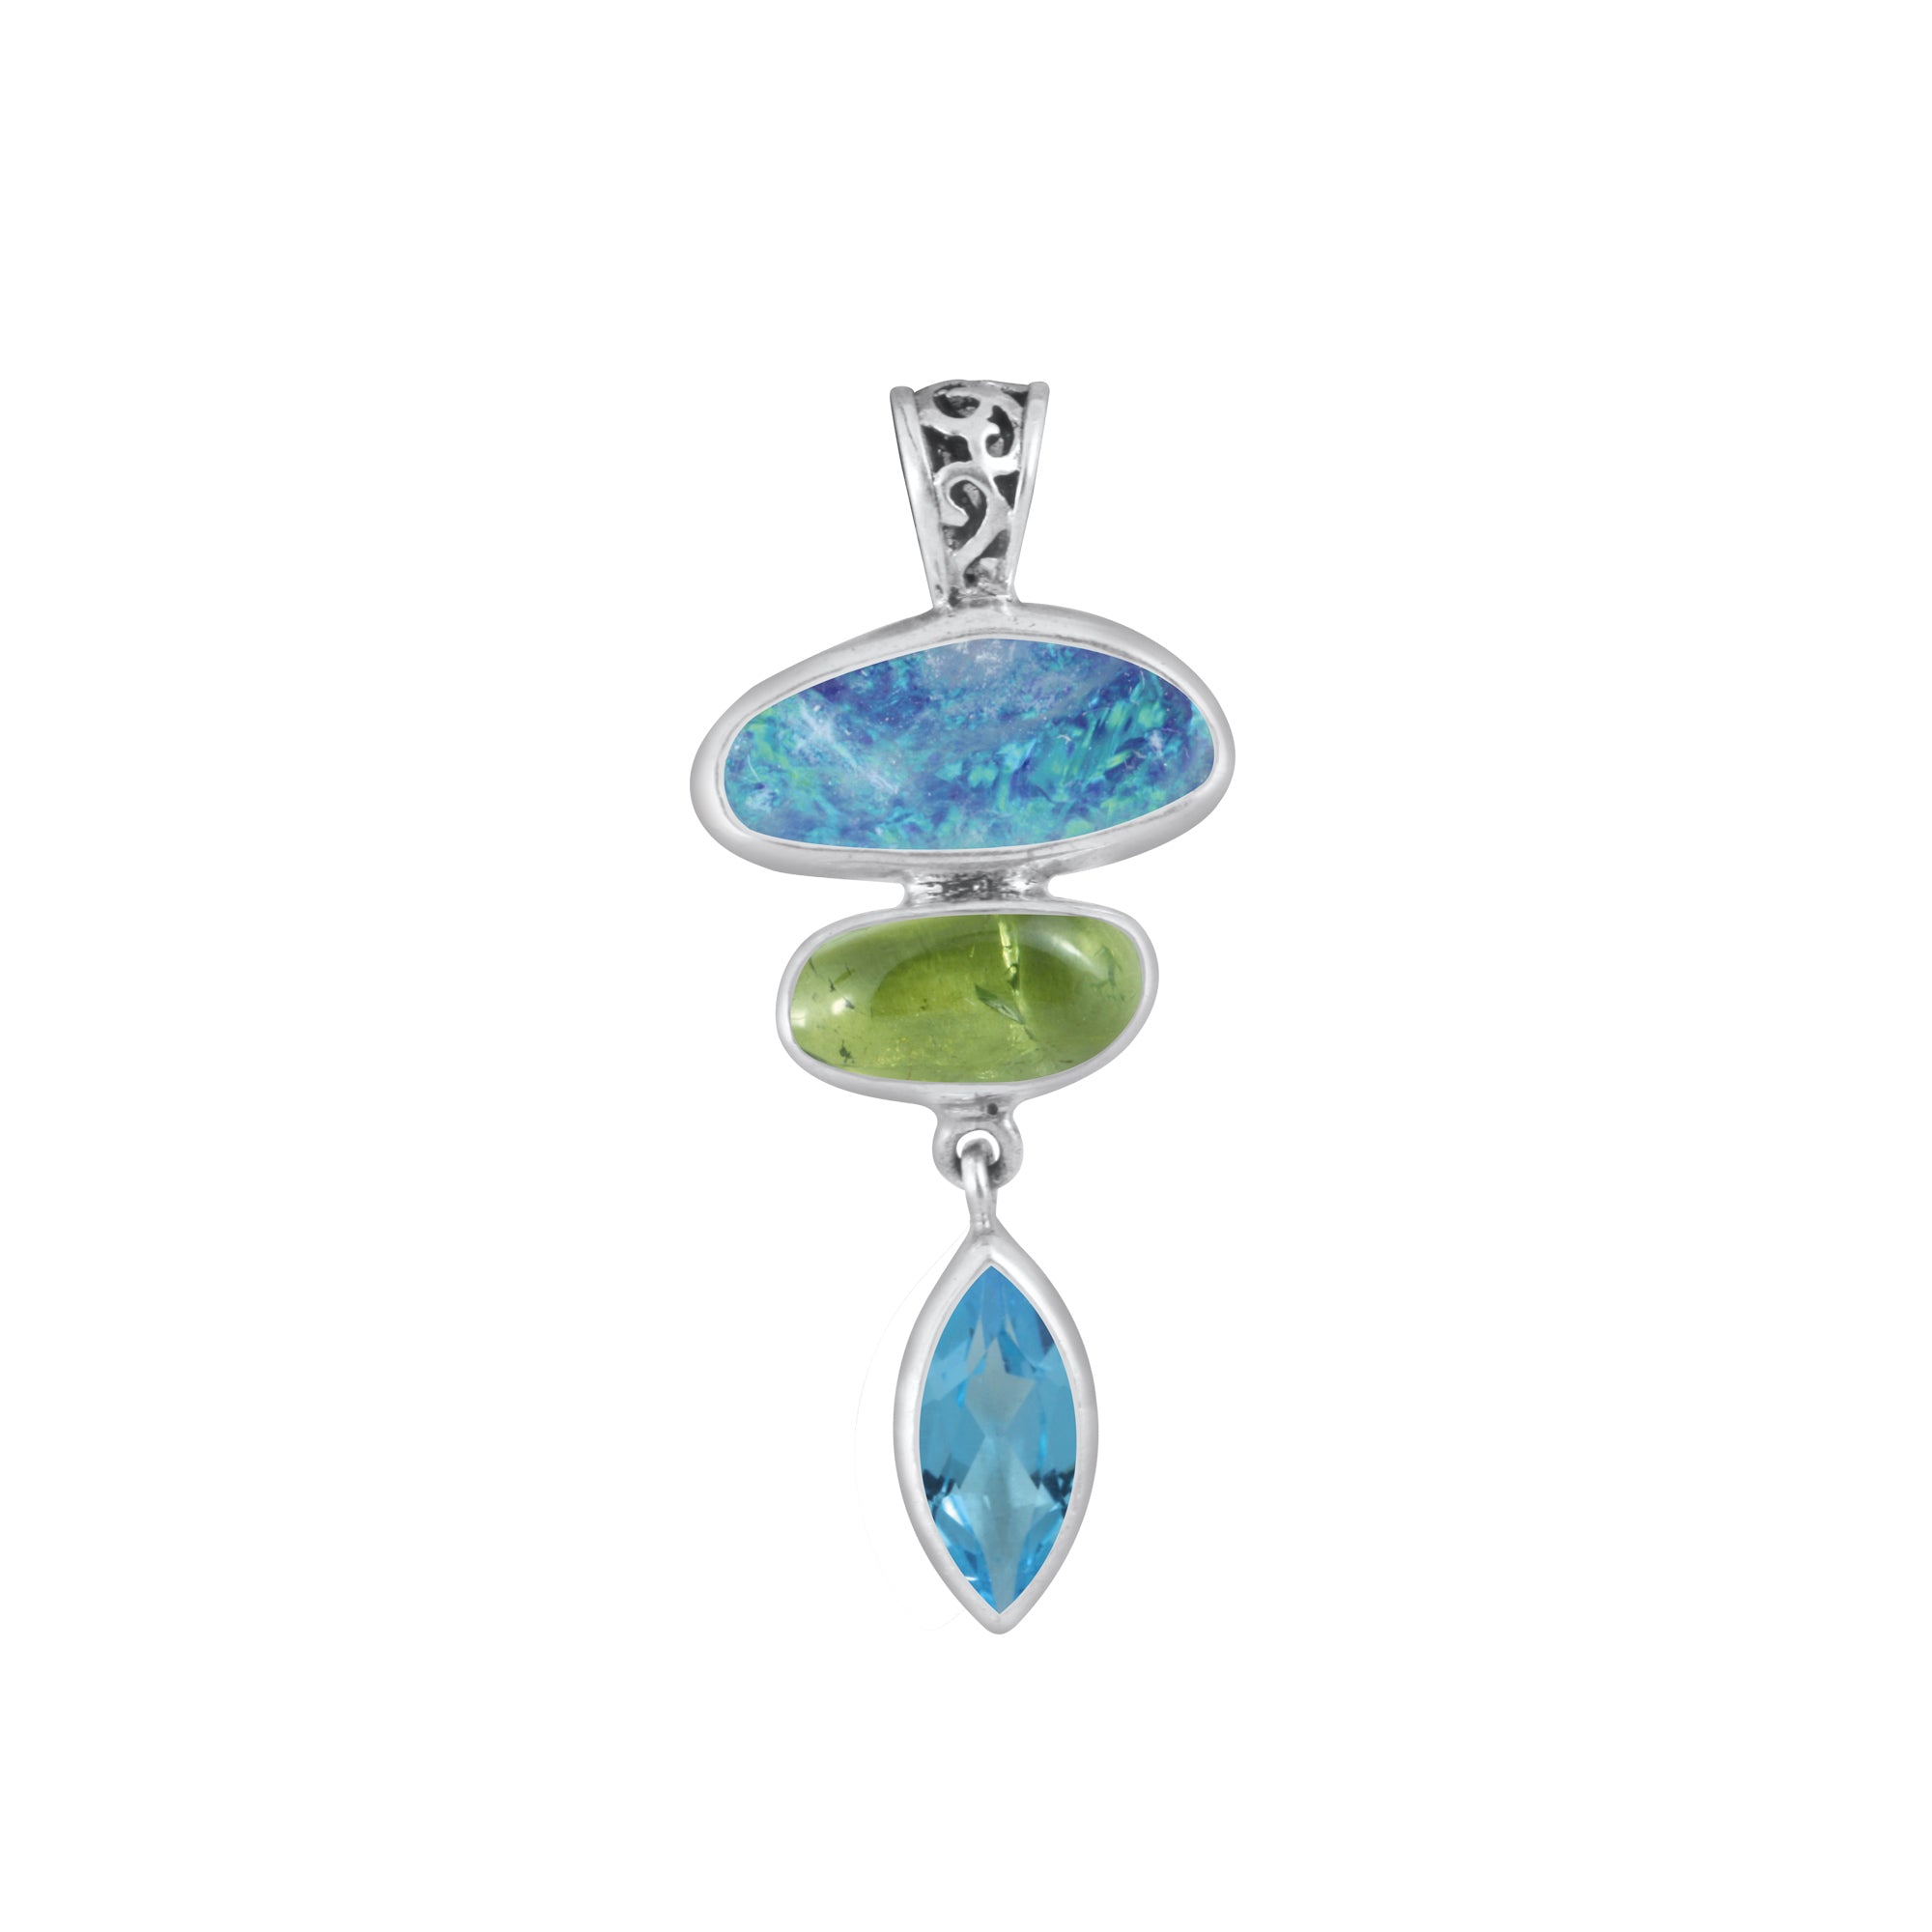 Gorgeous Opal & Tourmaline Pendant